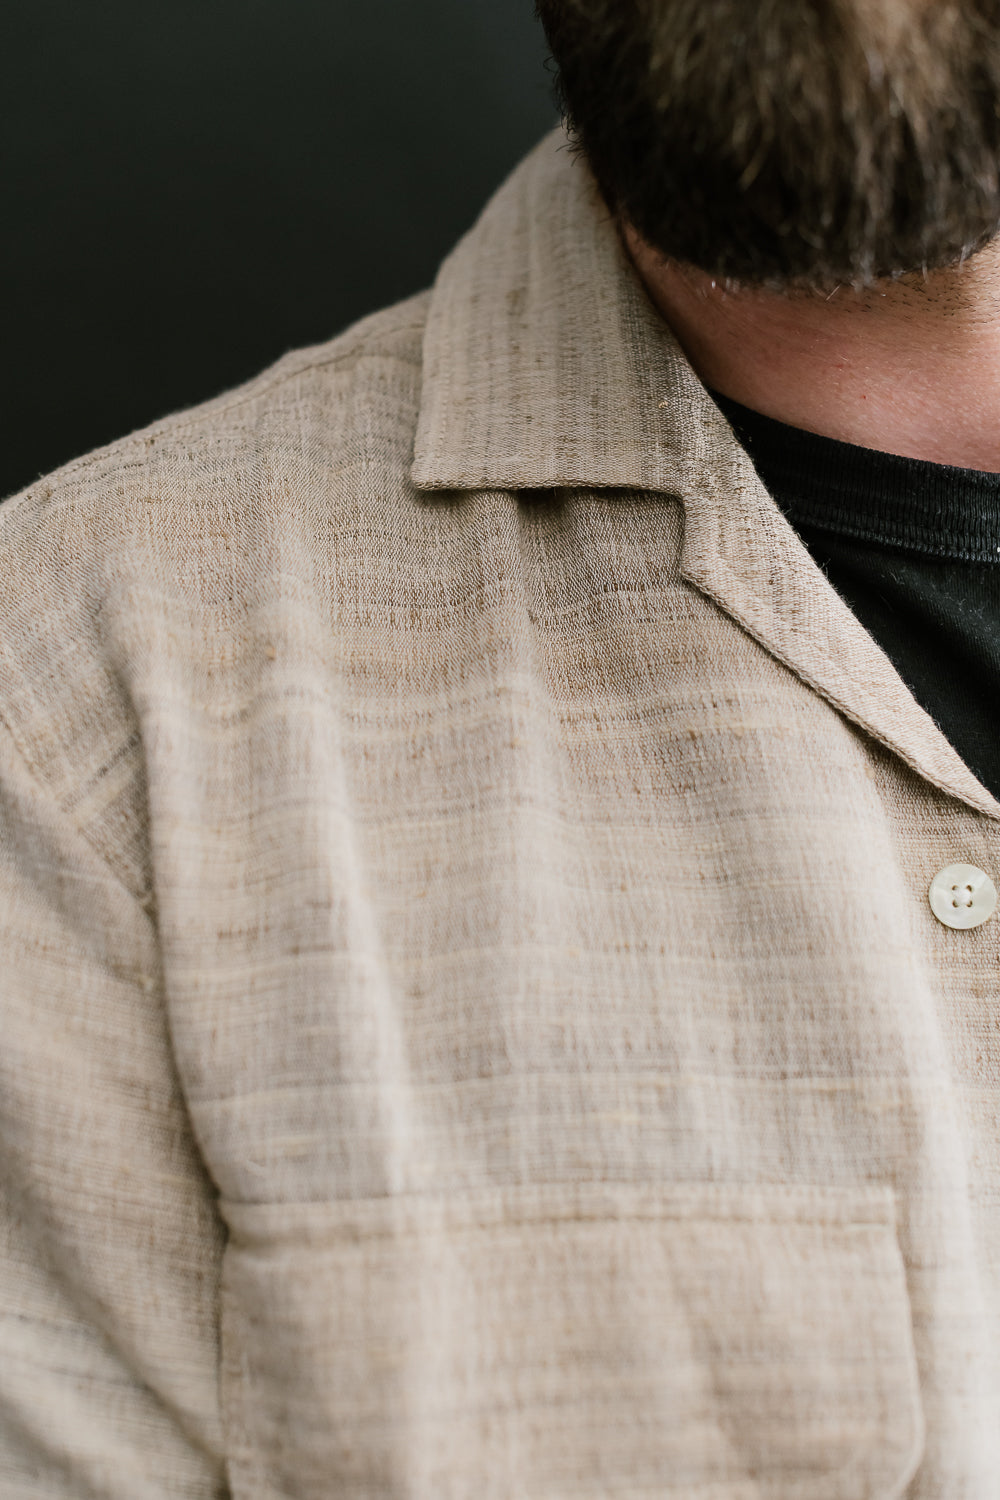 Open Collar Shirt Handloom Silk - Travertine